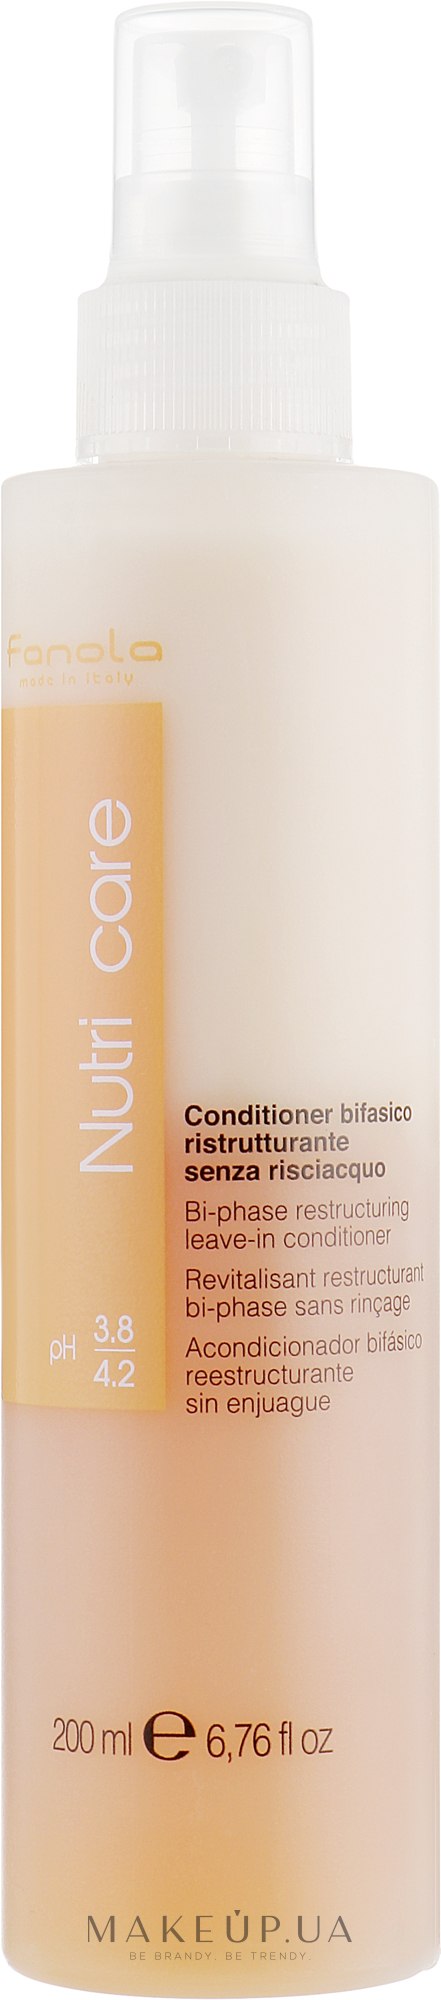 Двофазний спрей для волосся - Fanola Nutri Care Bi-phase Conditioner — фото 200ml